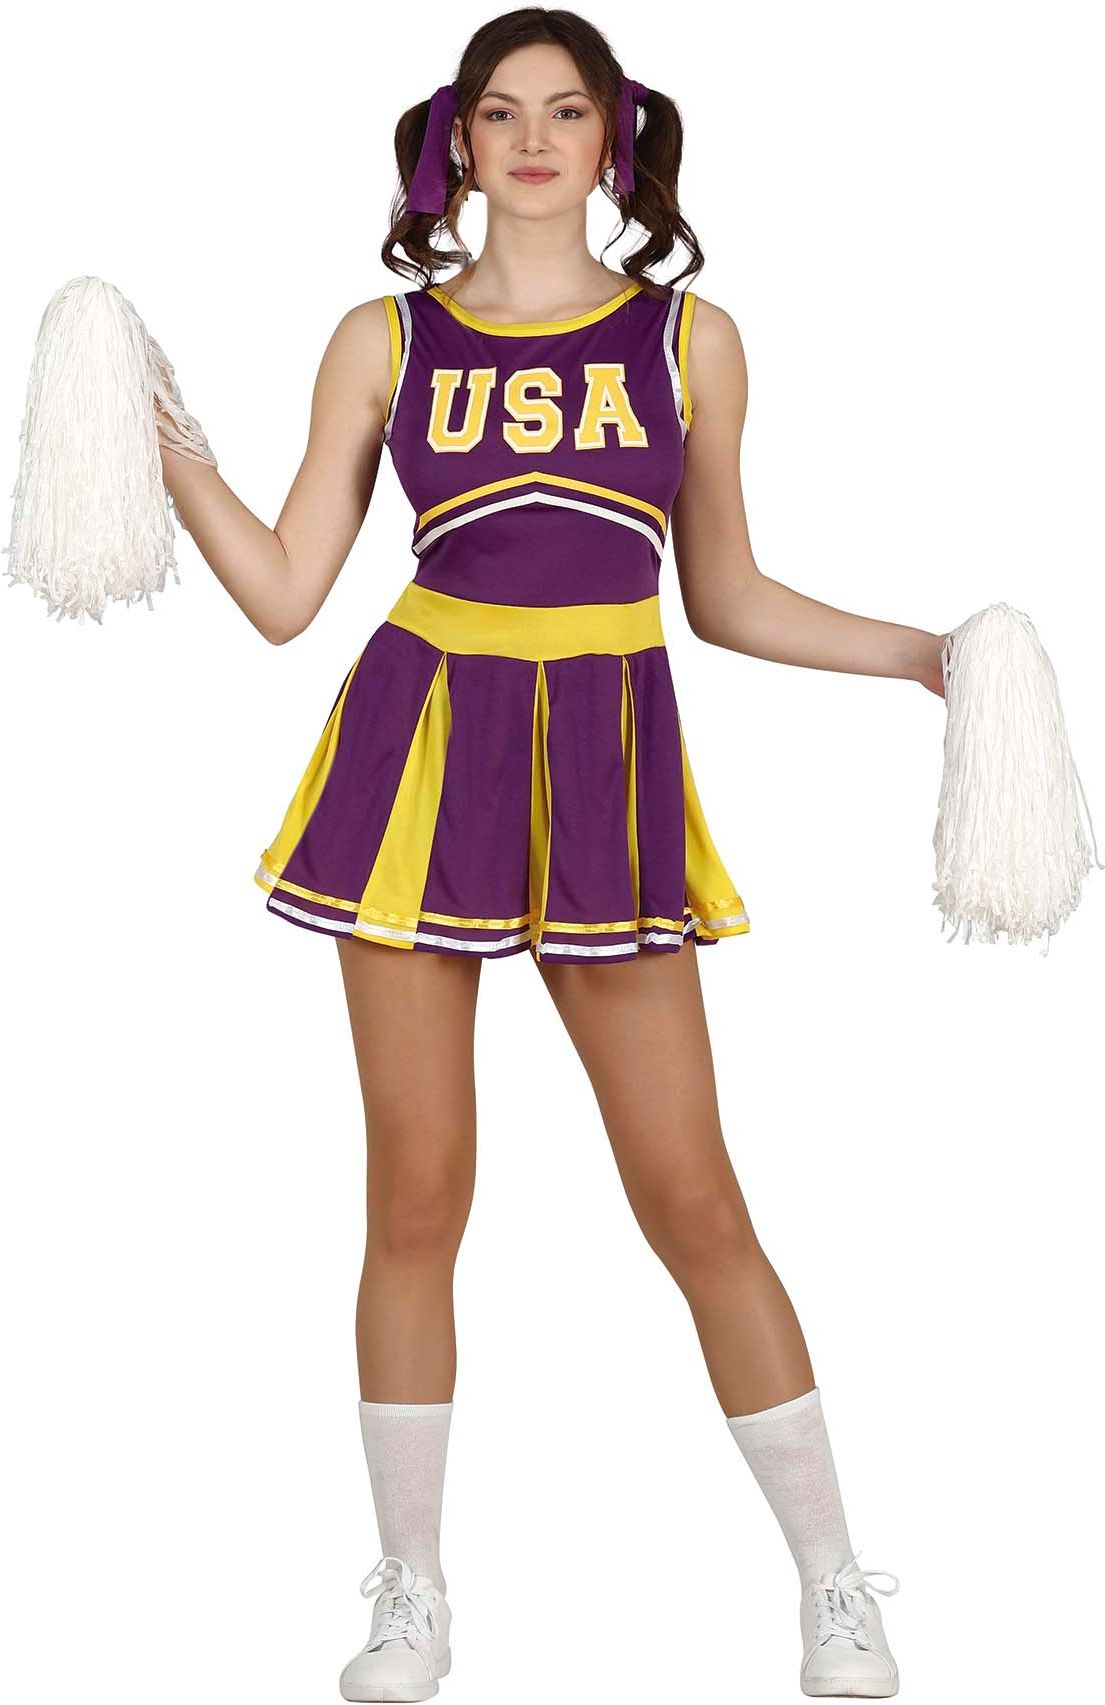 USA cheerleader outfit tiener